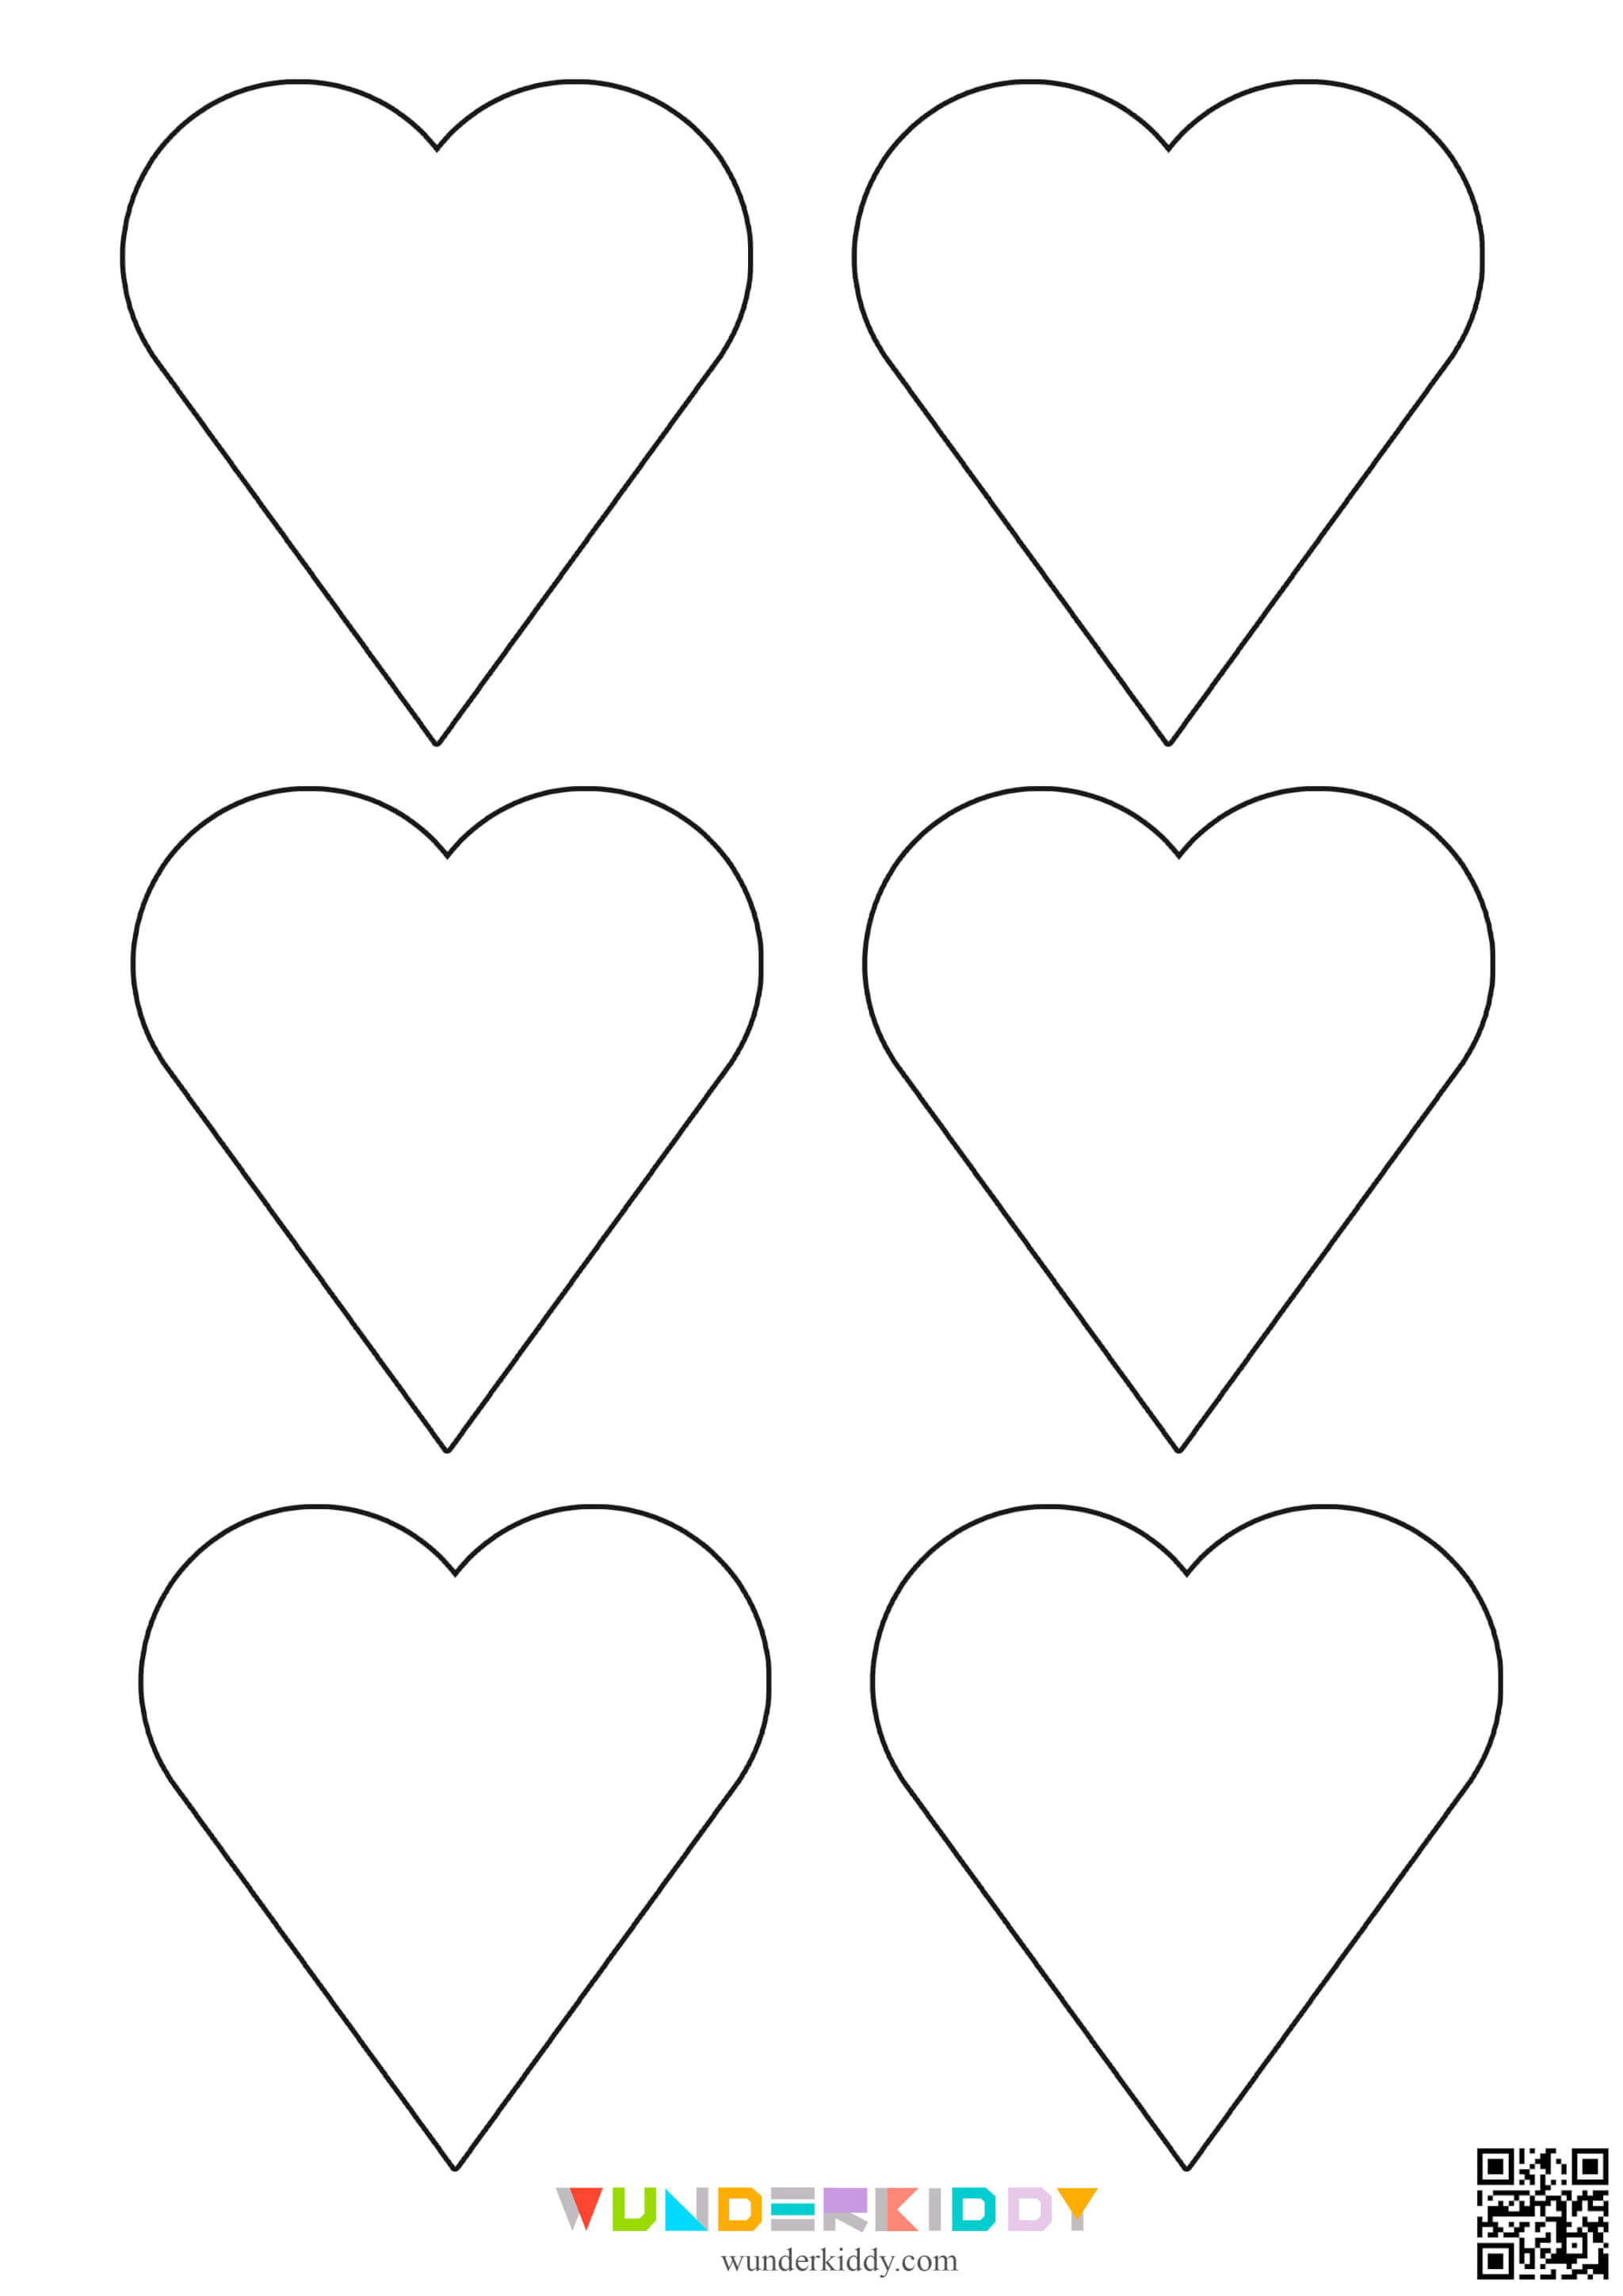 Heart Template Printable - Image 7